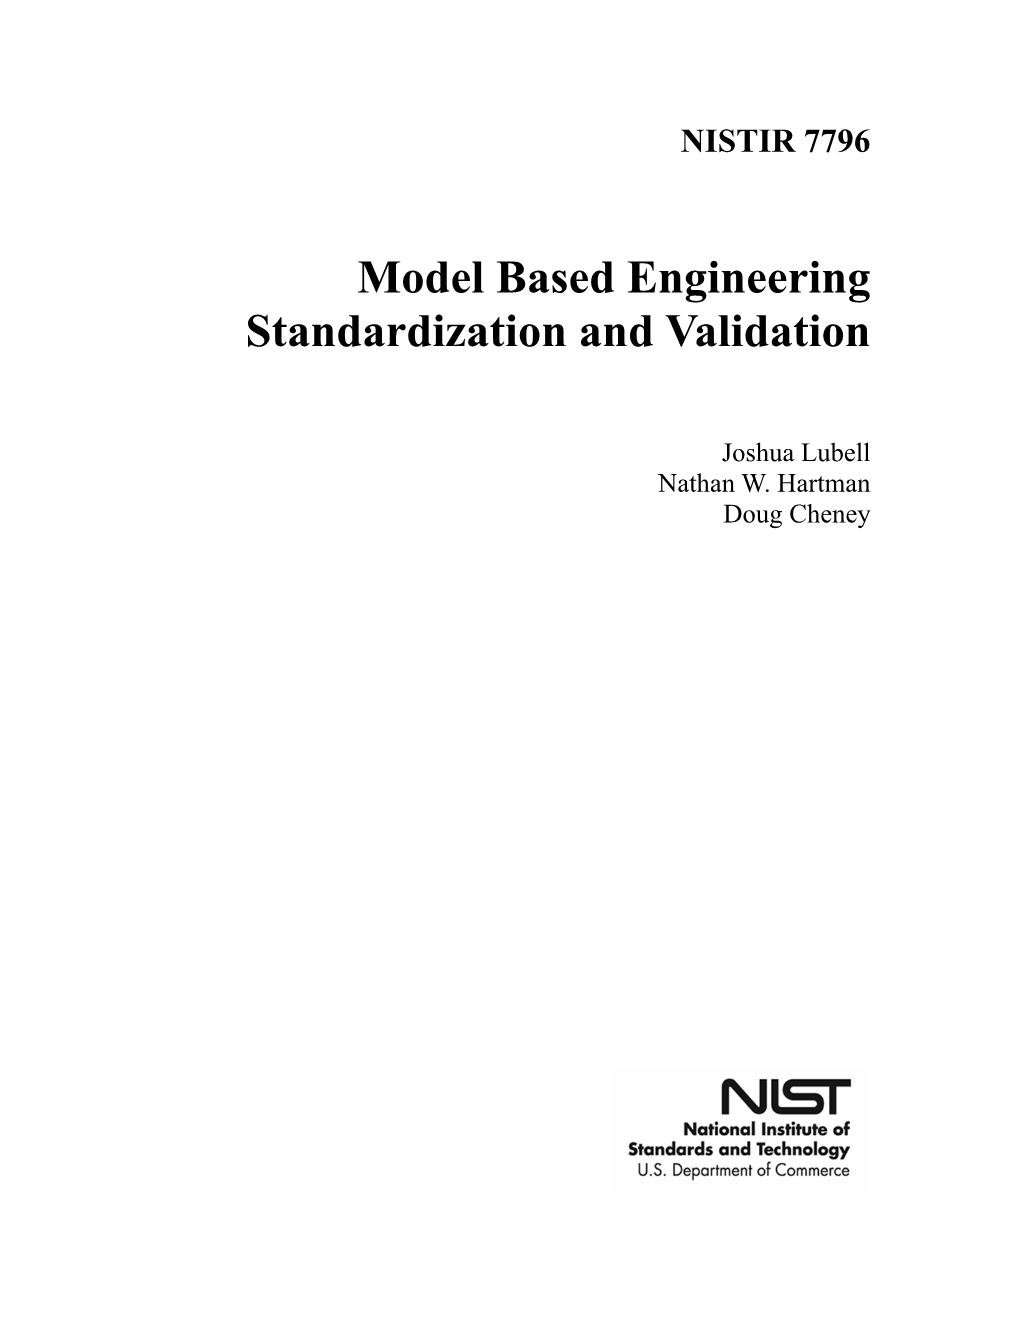 Model Based Engineering Standardization and Validation